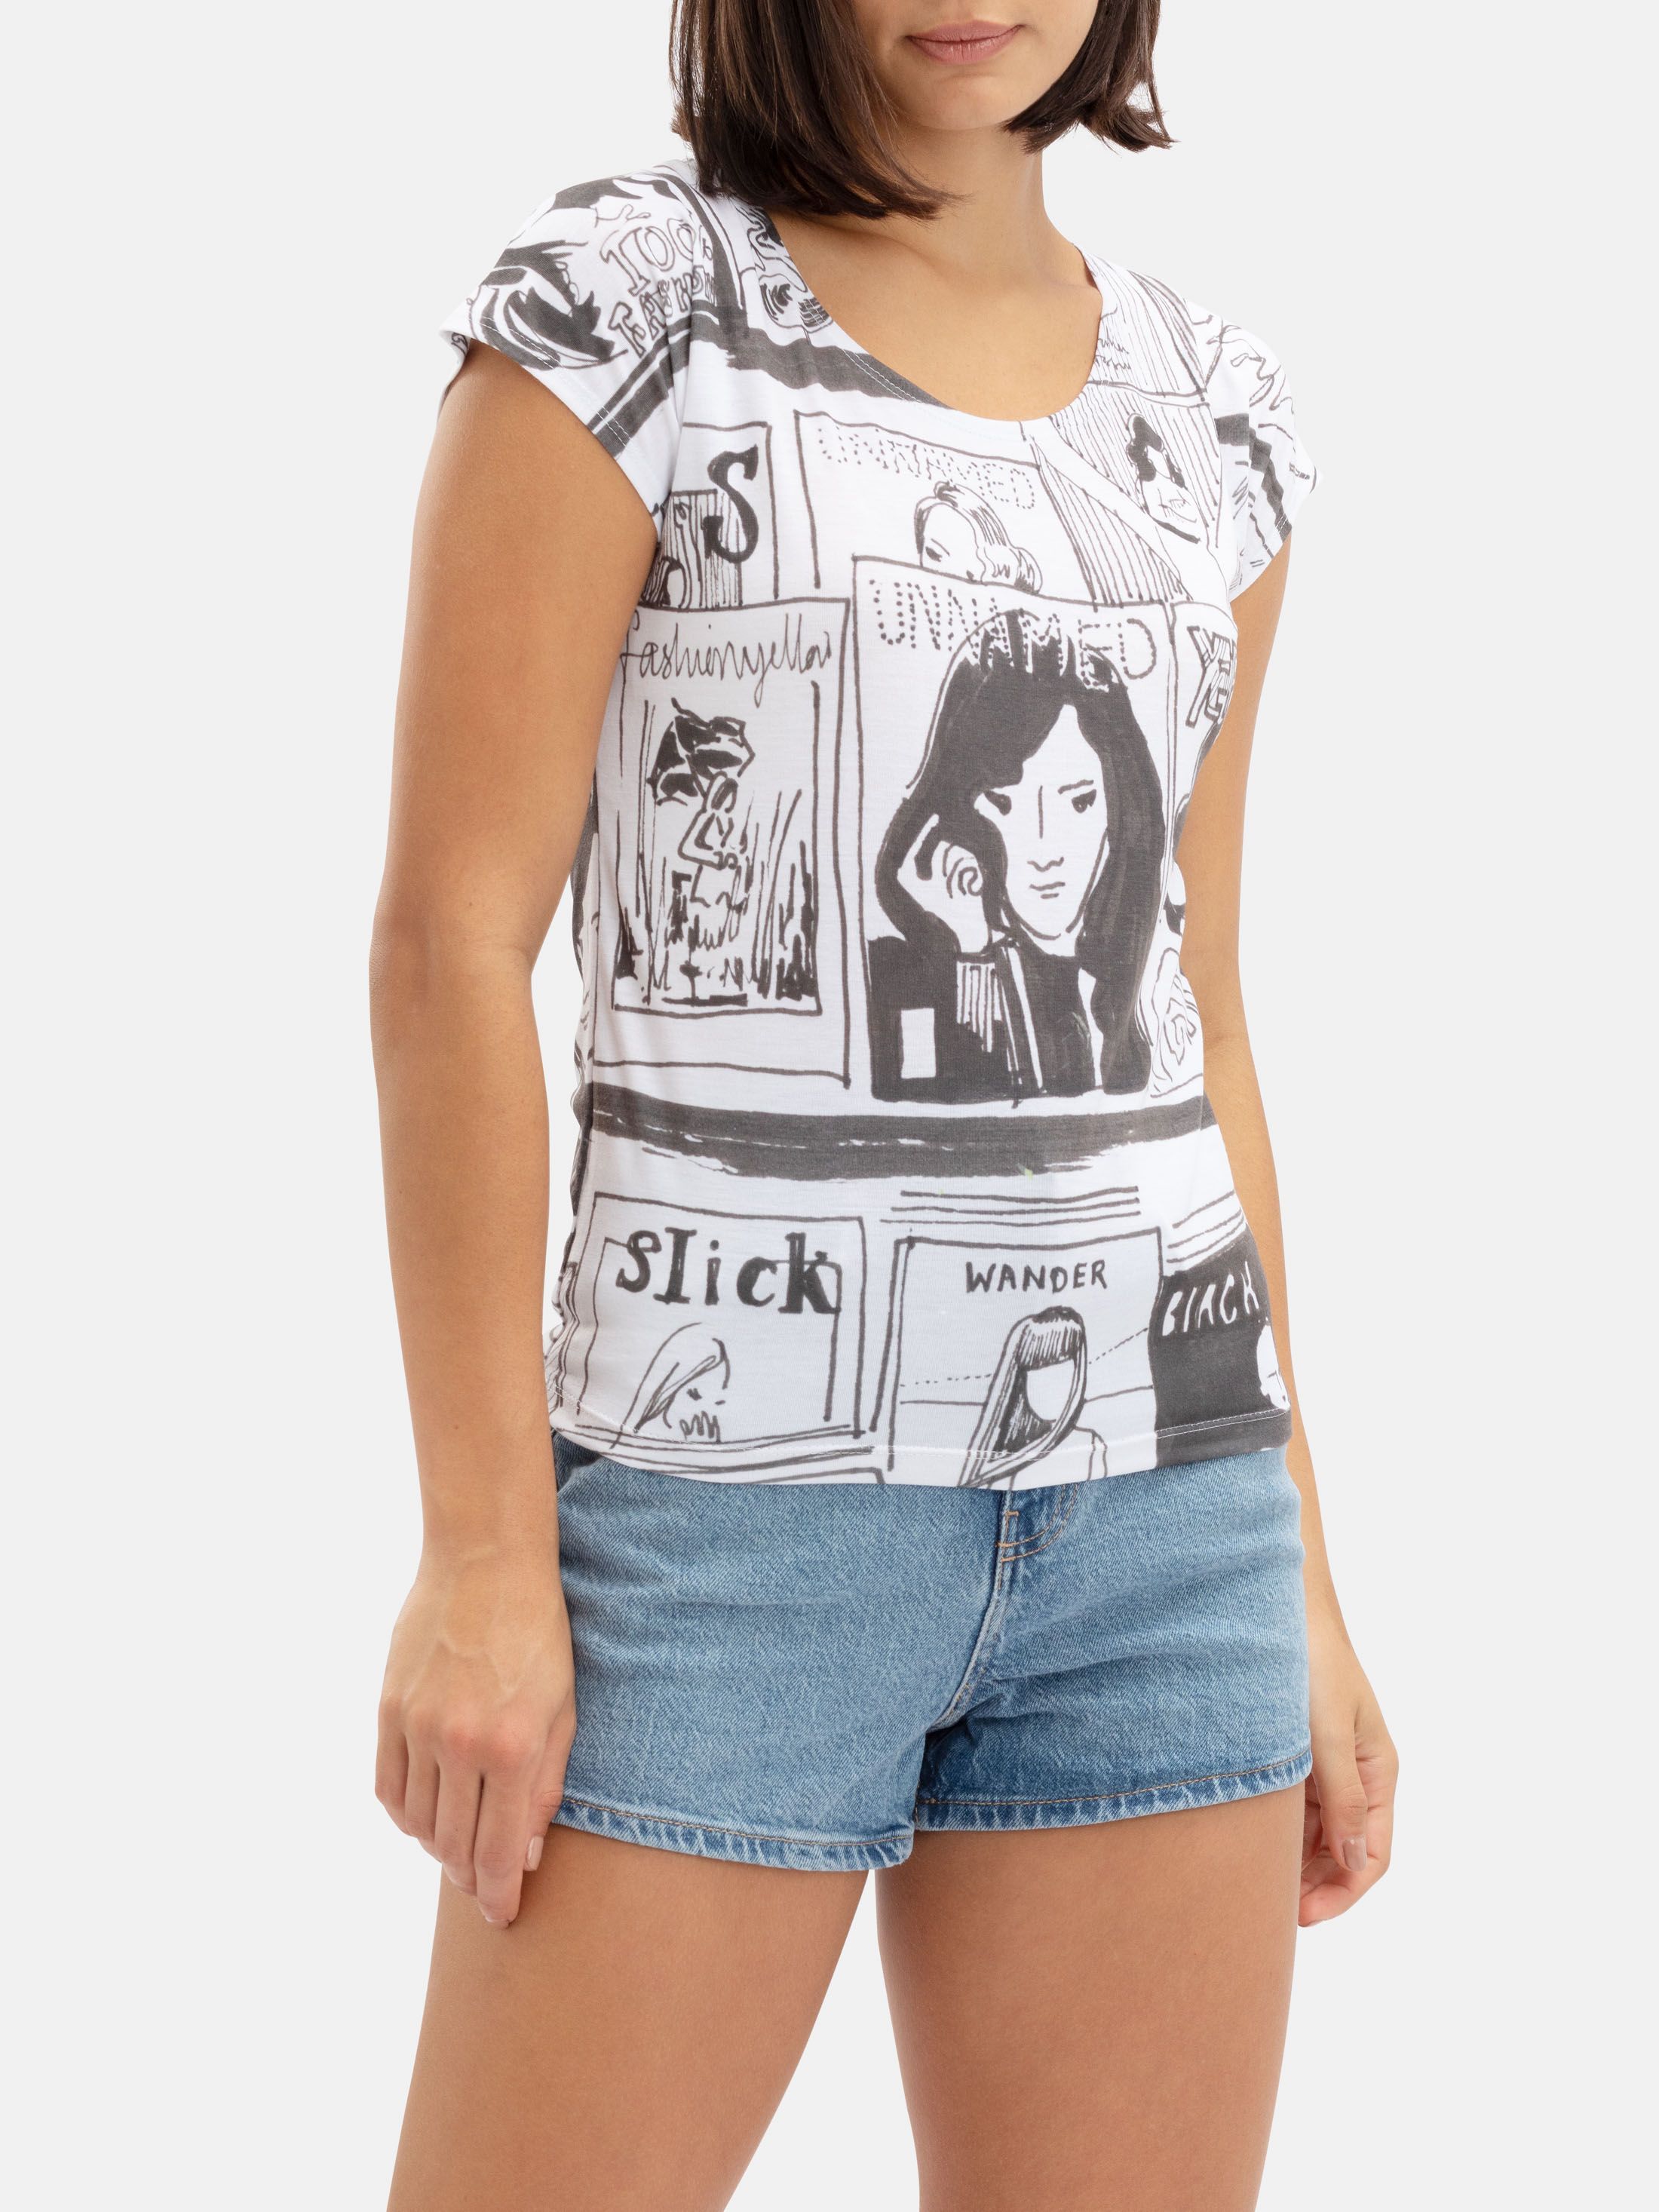 Imprimir Camisetas Mujer Online